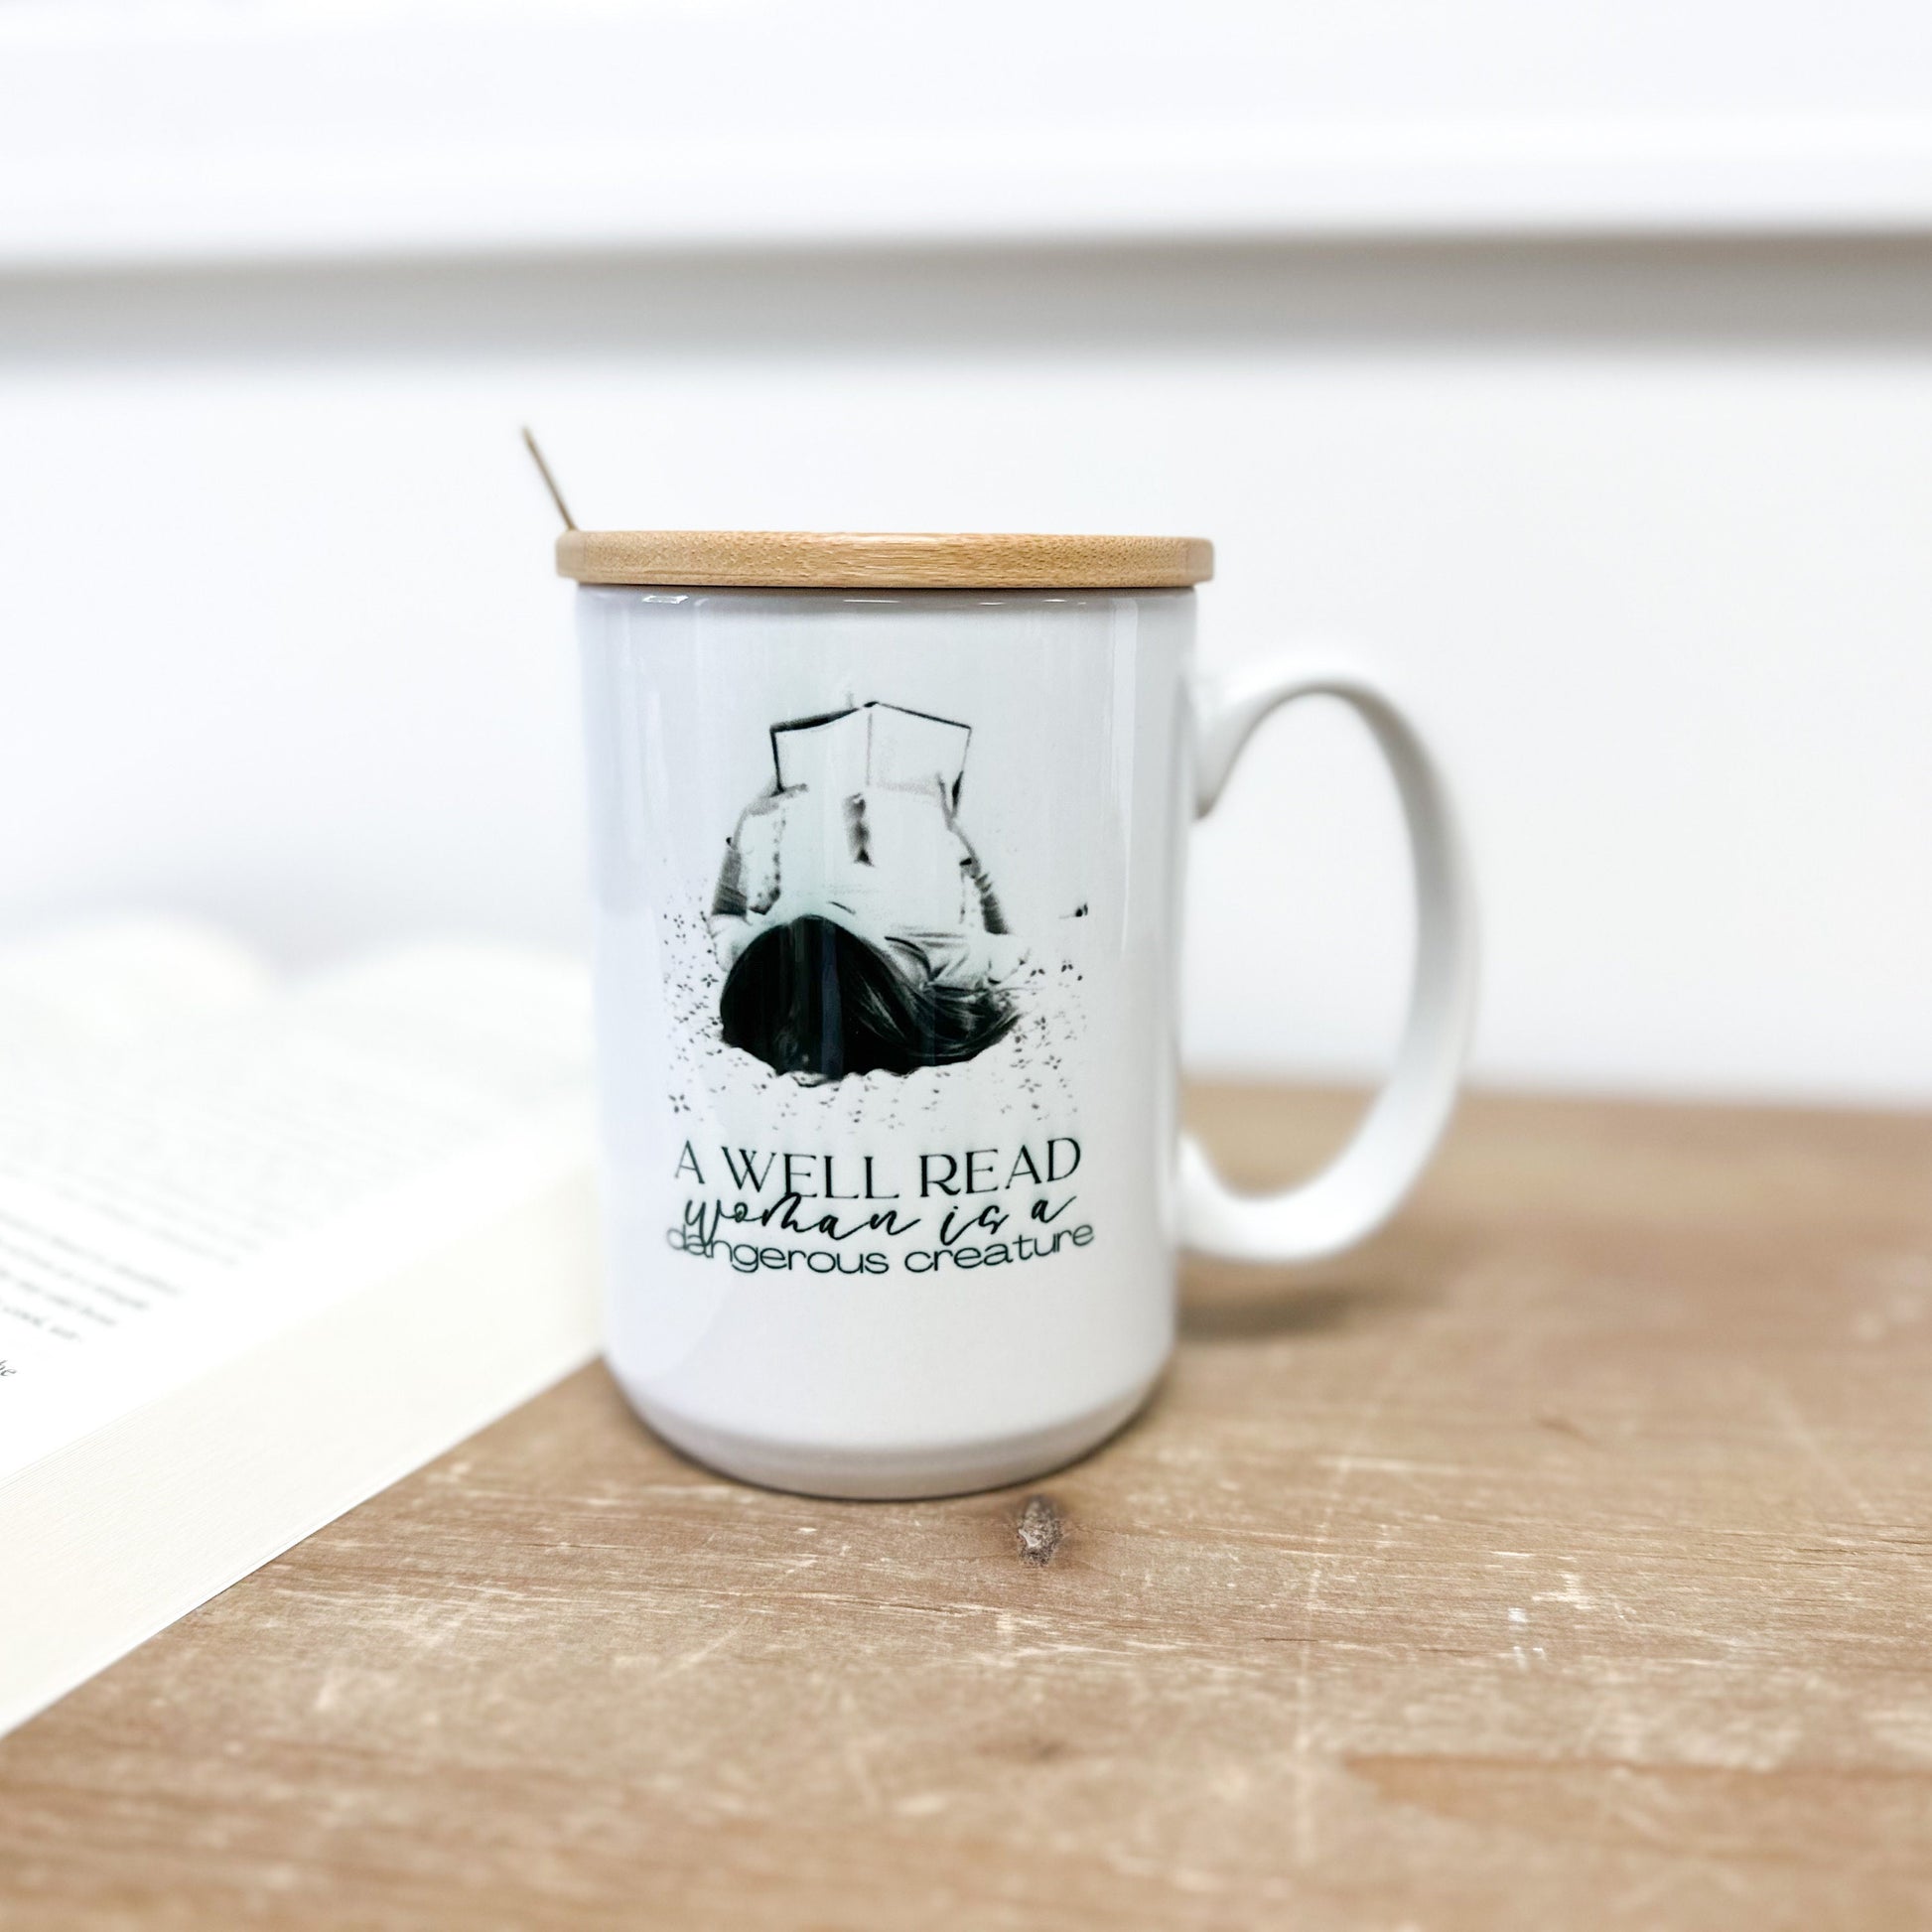 A Well Read Woman, Coffee Mug, Book Related Gift